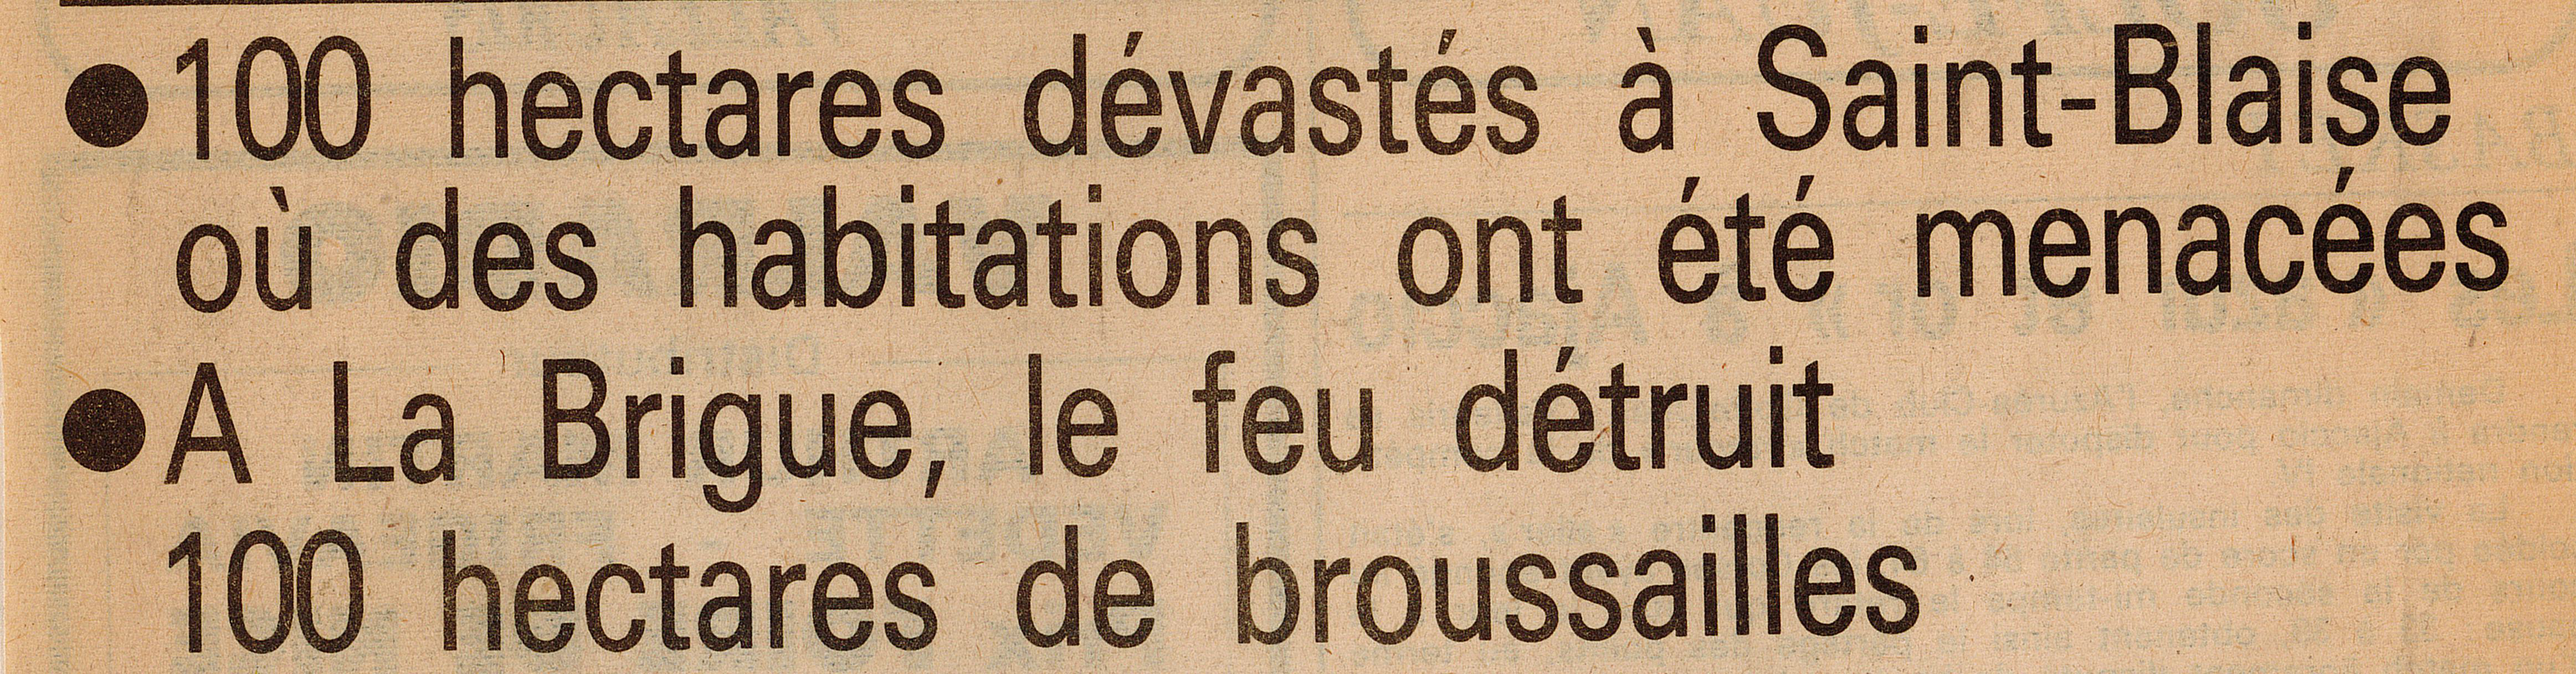 CUT 1981.03.14 article NM fdf st blaise la brigue.jpg